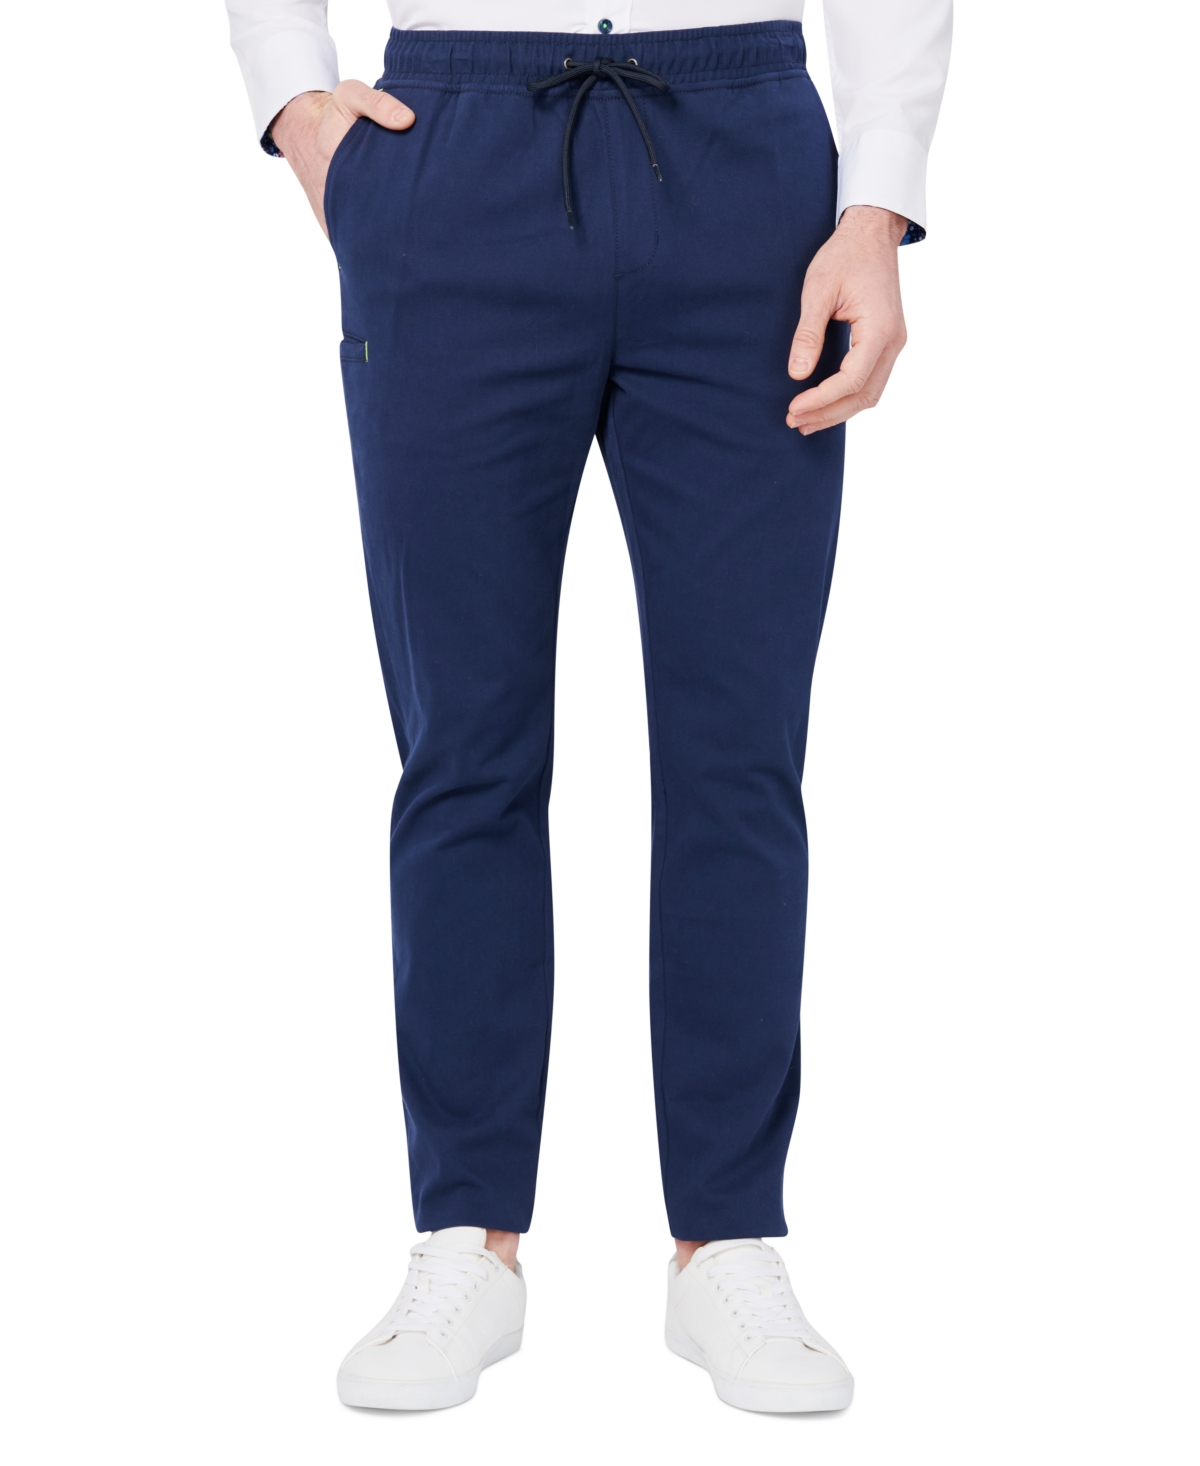 Men's Slim Fit Solid Drawstring Pants - Navy